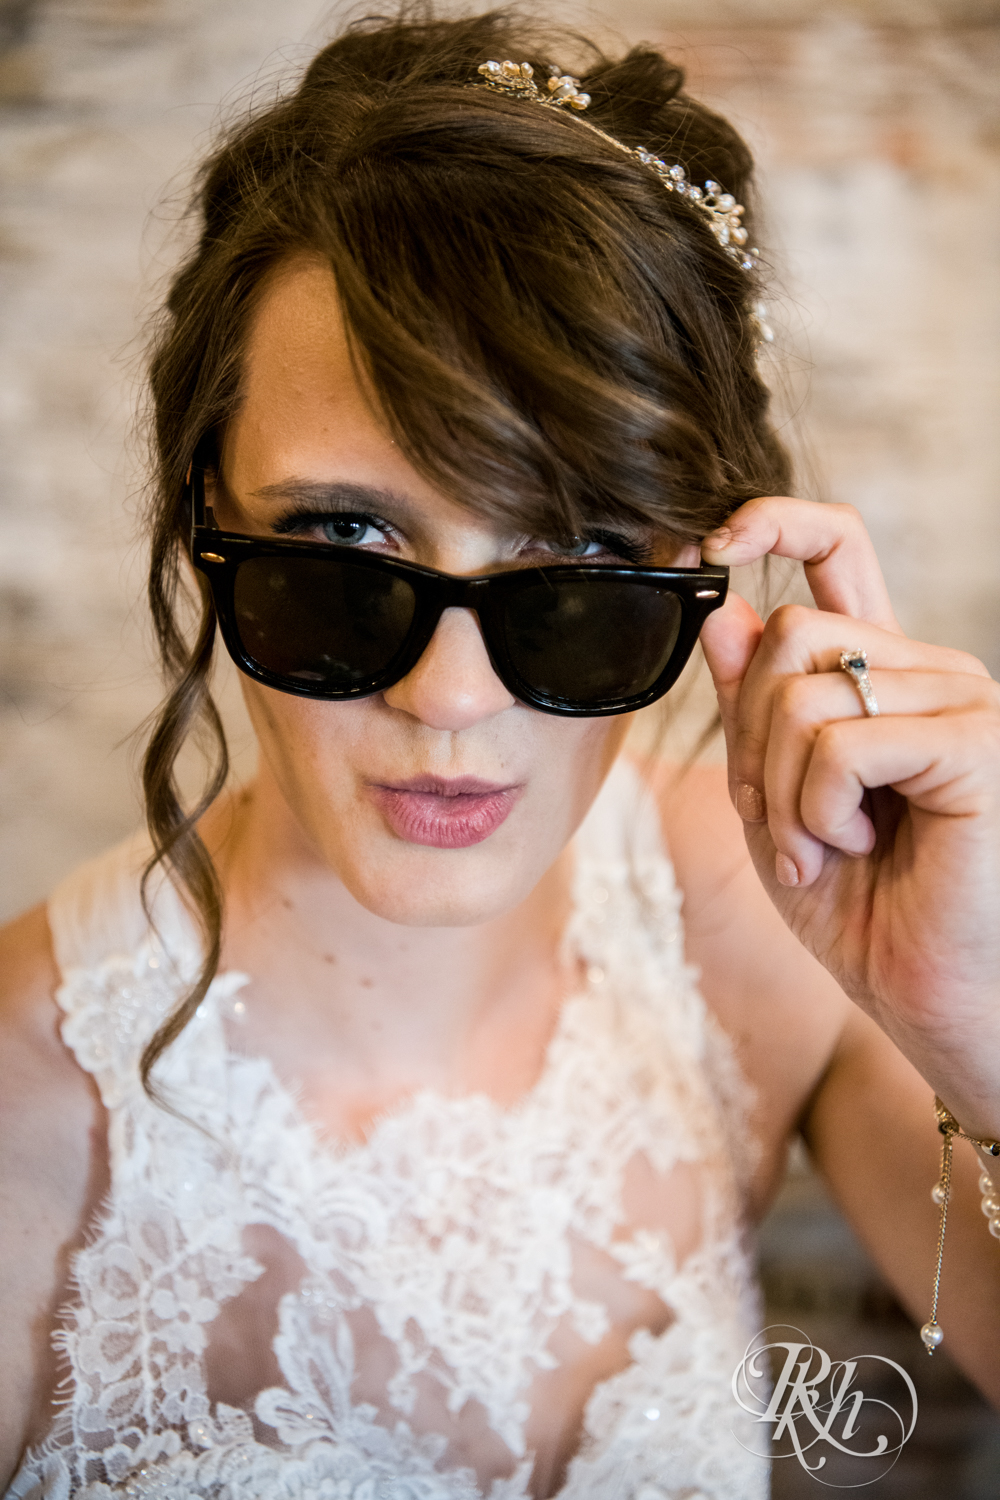 Bride with sunglasses